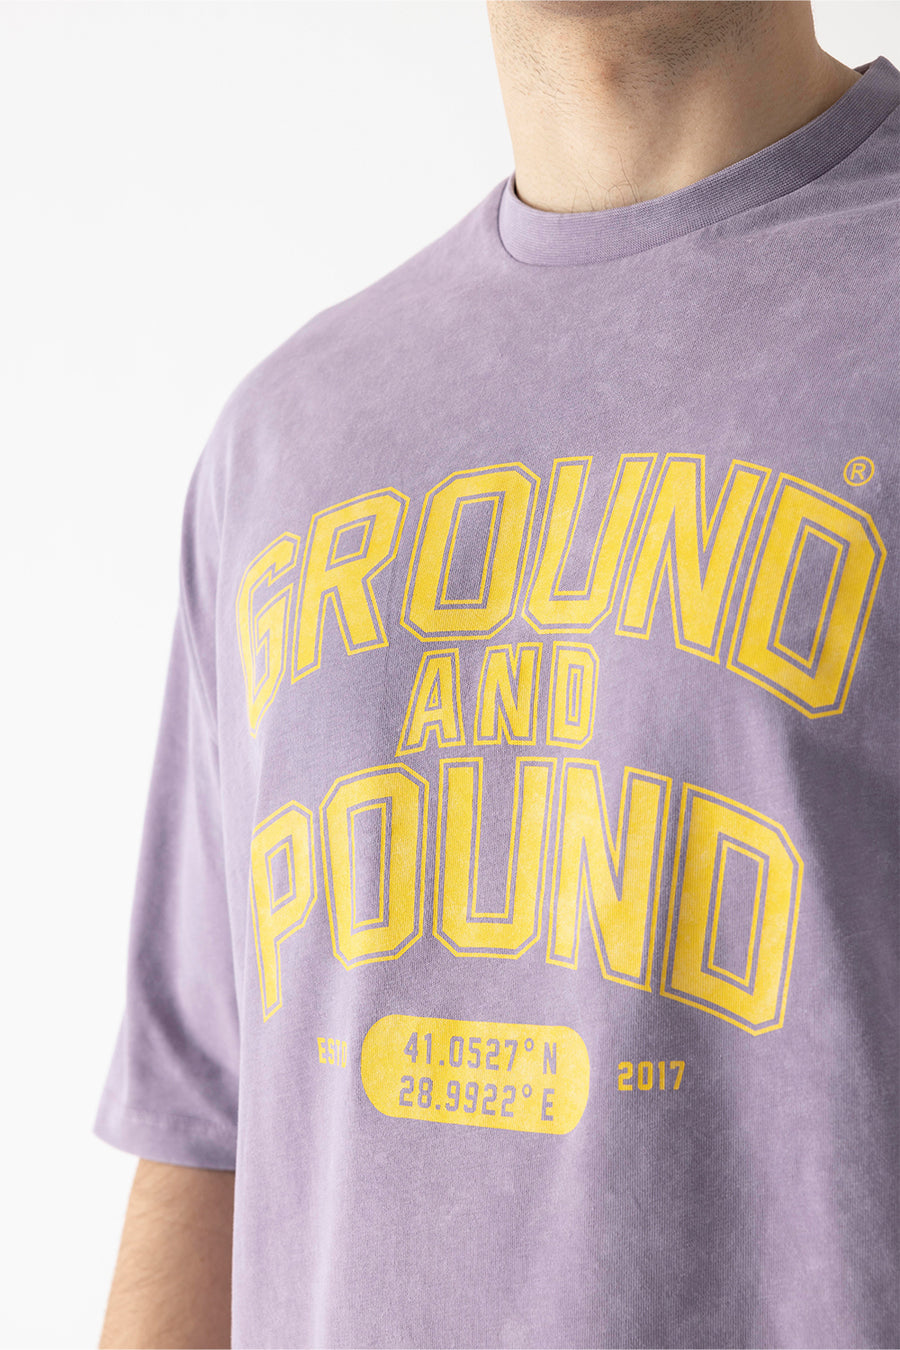 Ground And Pound Washed Oversize T-Shirt Purple